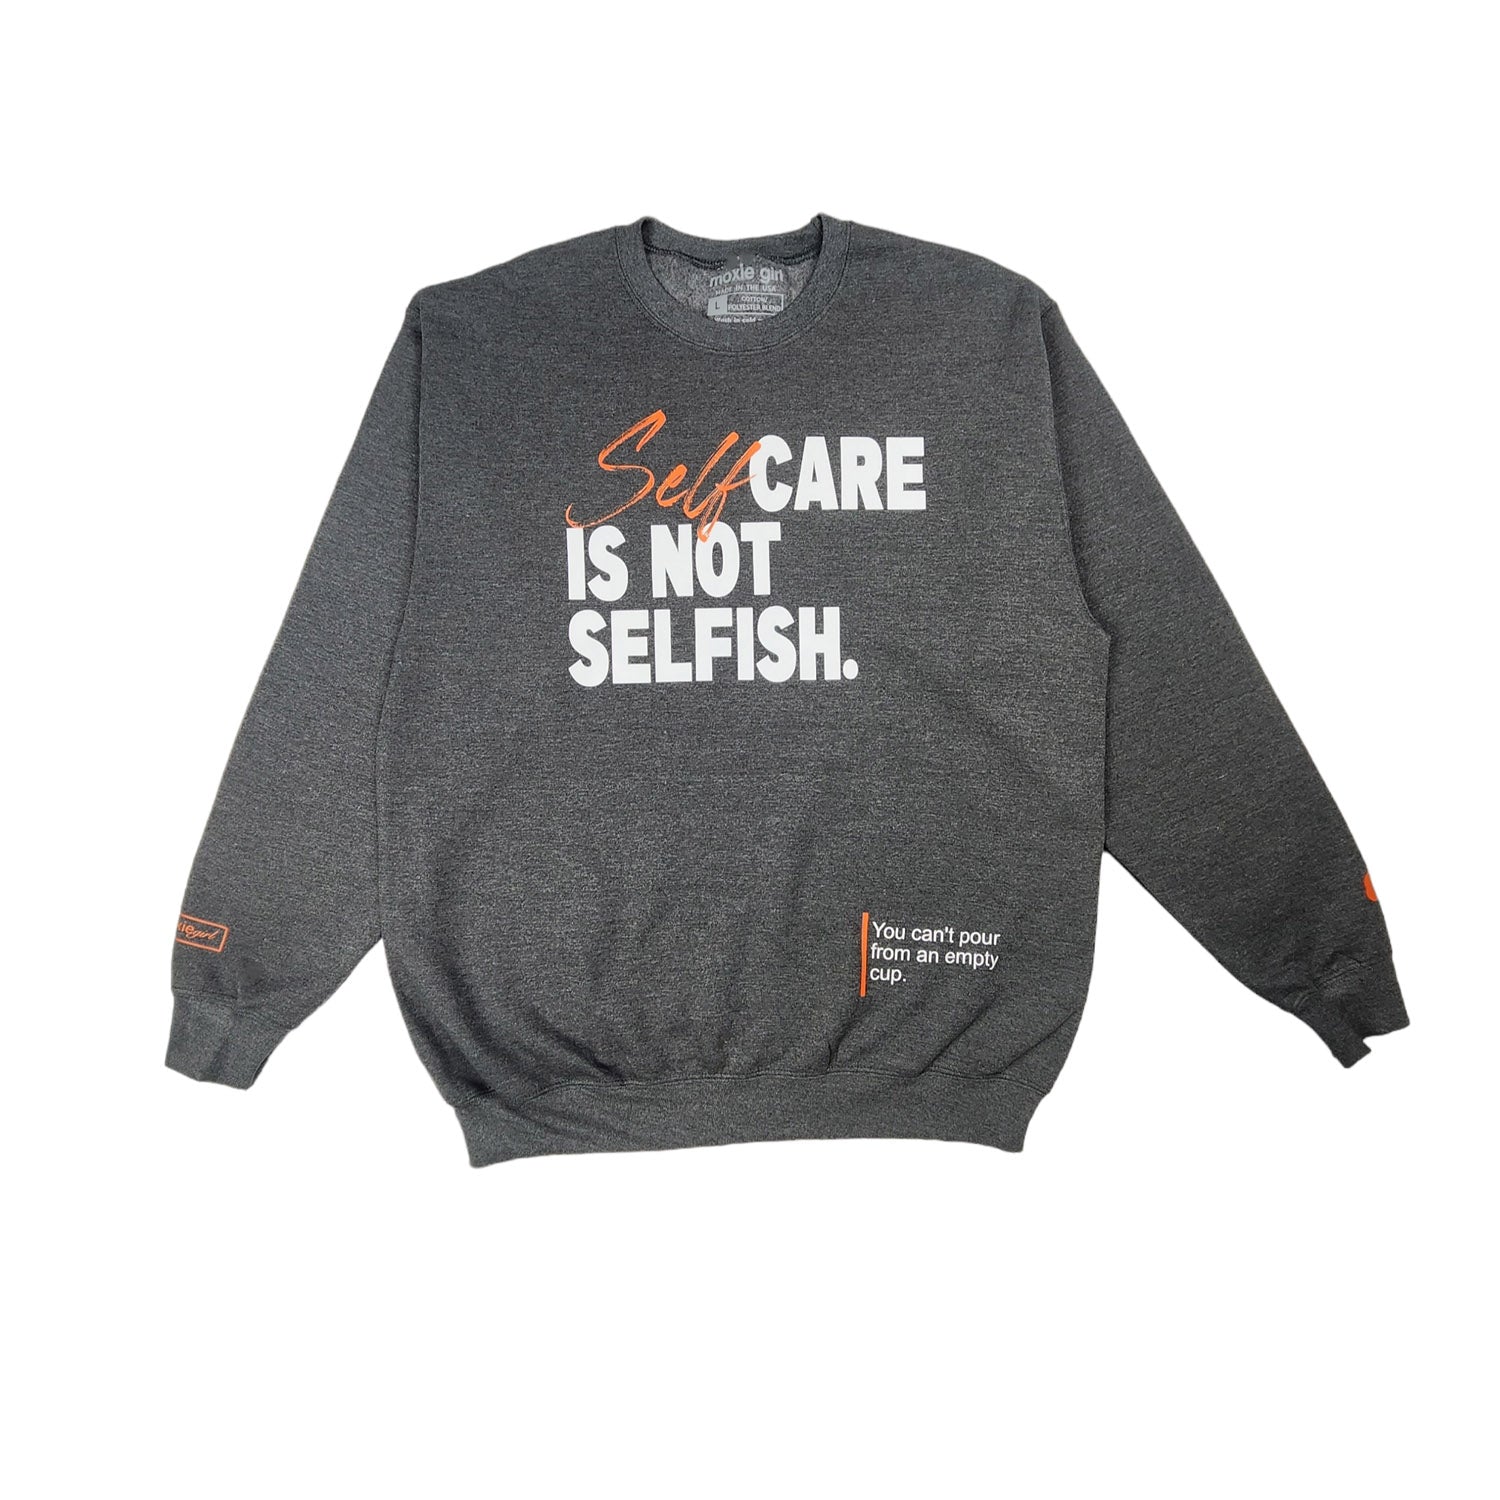 Self-Care Is Not Selfish Crewneck Sweatshirt – Dark Heathered Gray